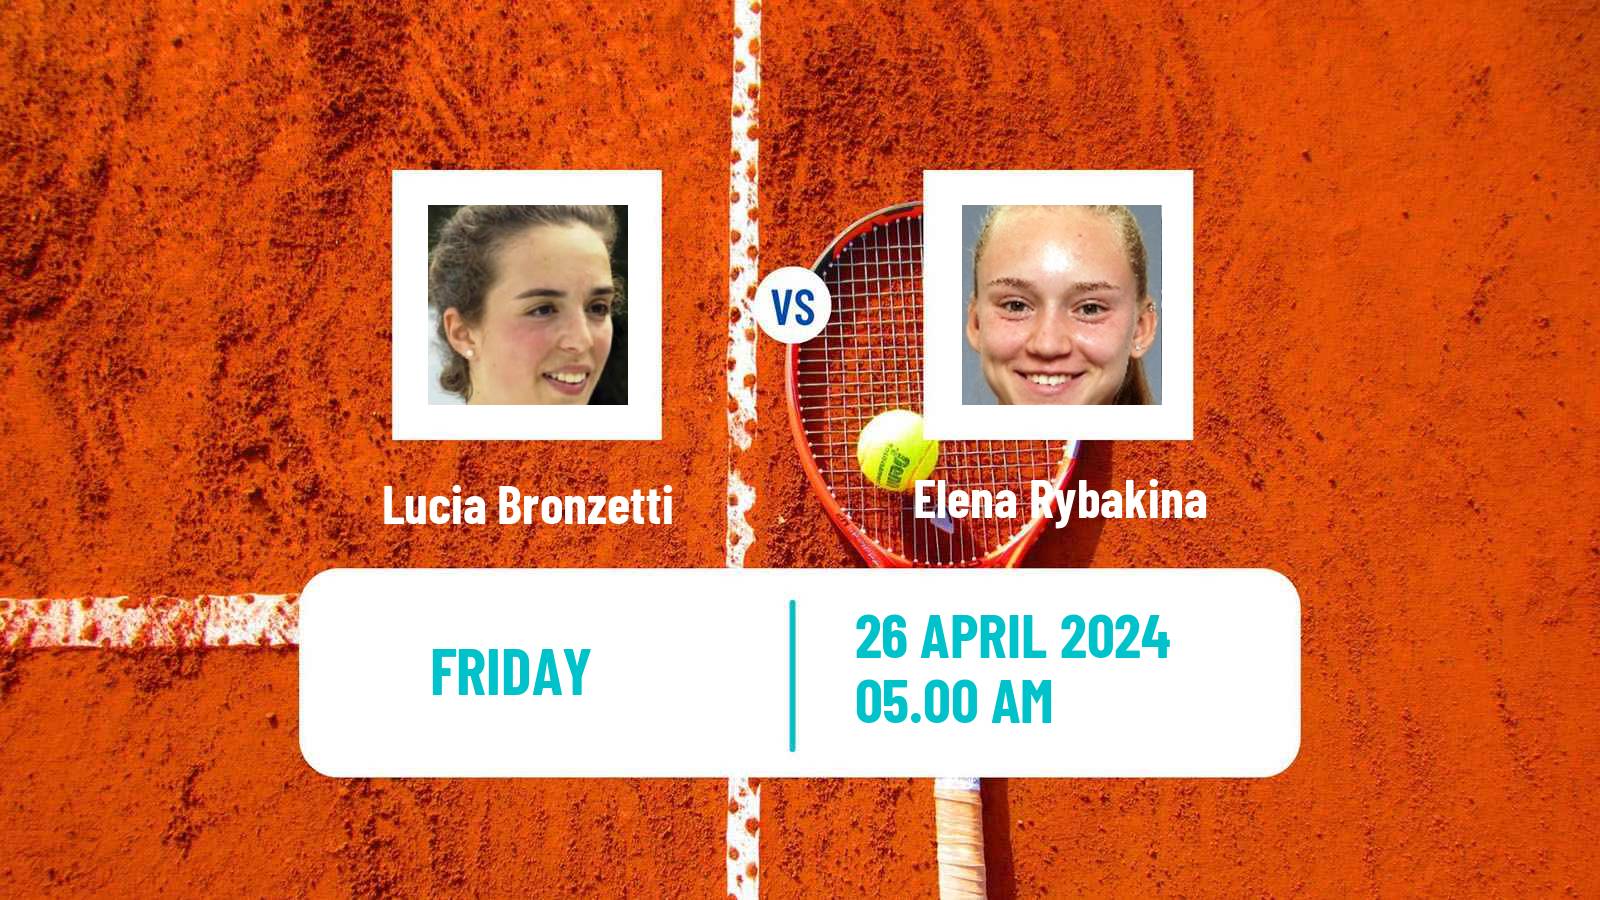 Tennis WTA Madrid Lucia Bronzetti - Elena Rybakina